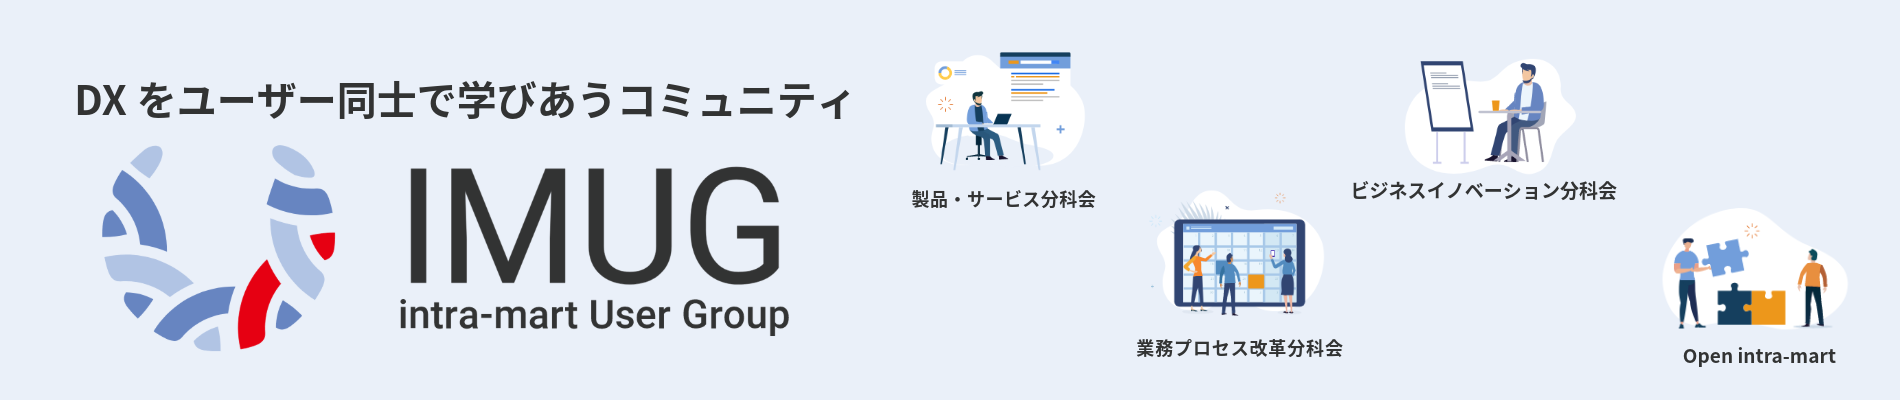 DXをユーザー同士で学びあうコミュニティ IMUG intra-mart User Group